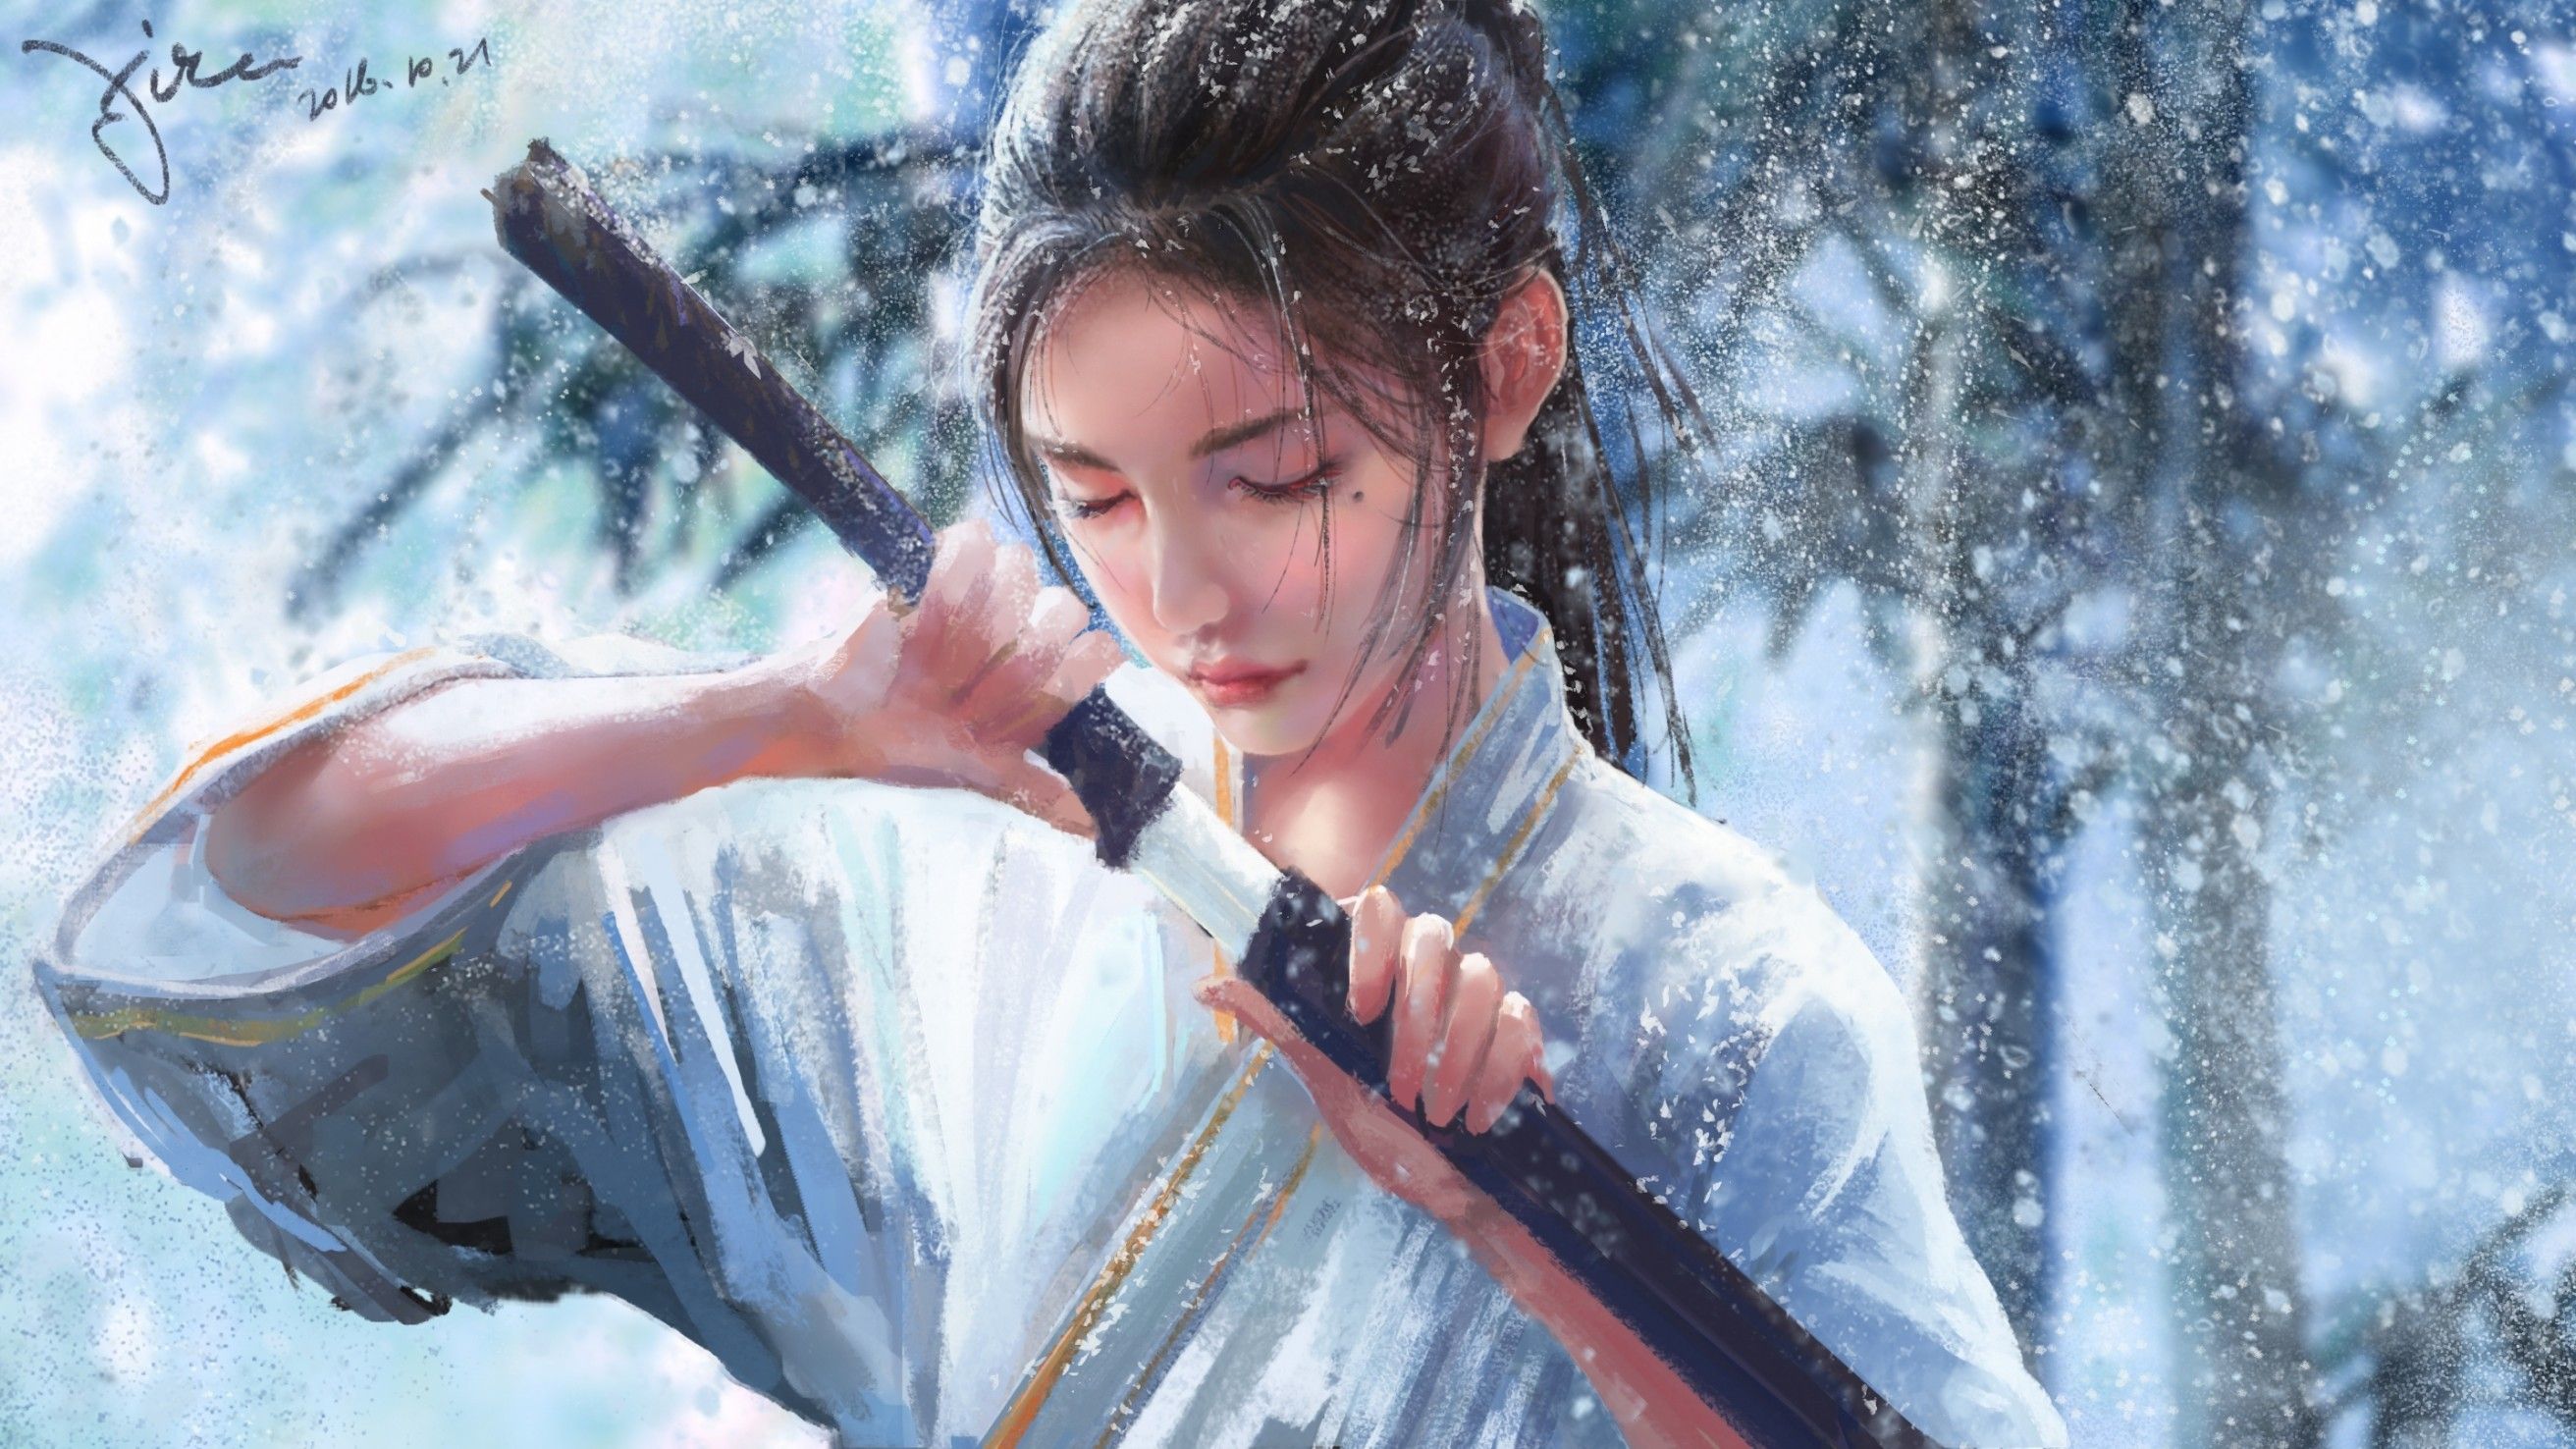 Download 2624x1476 Japanese Women, Fantasy Girl, Katana, Kimono, Ponytail, Snow, Winter, Closed Eyes, Realistic Wallpaper